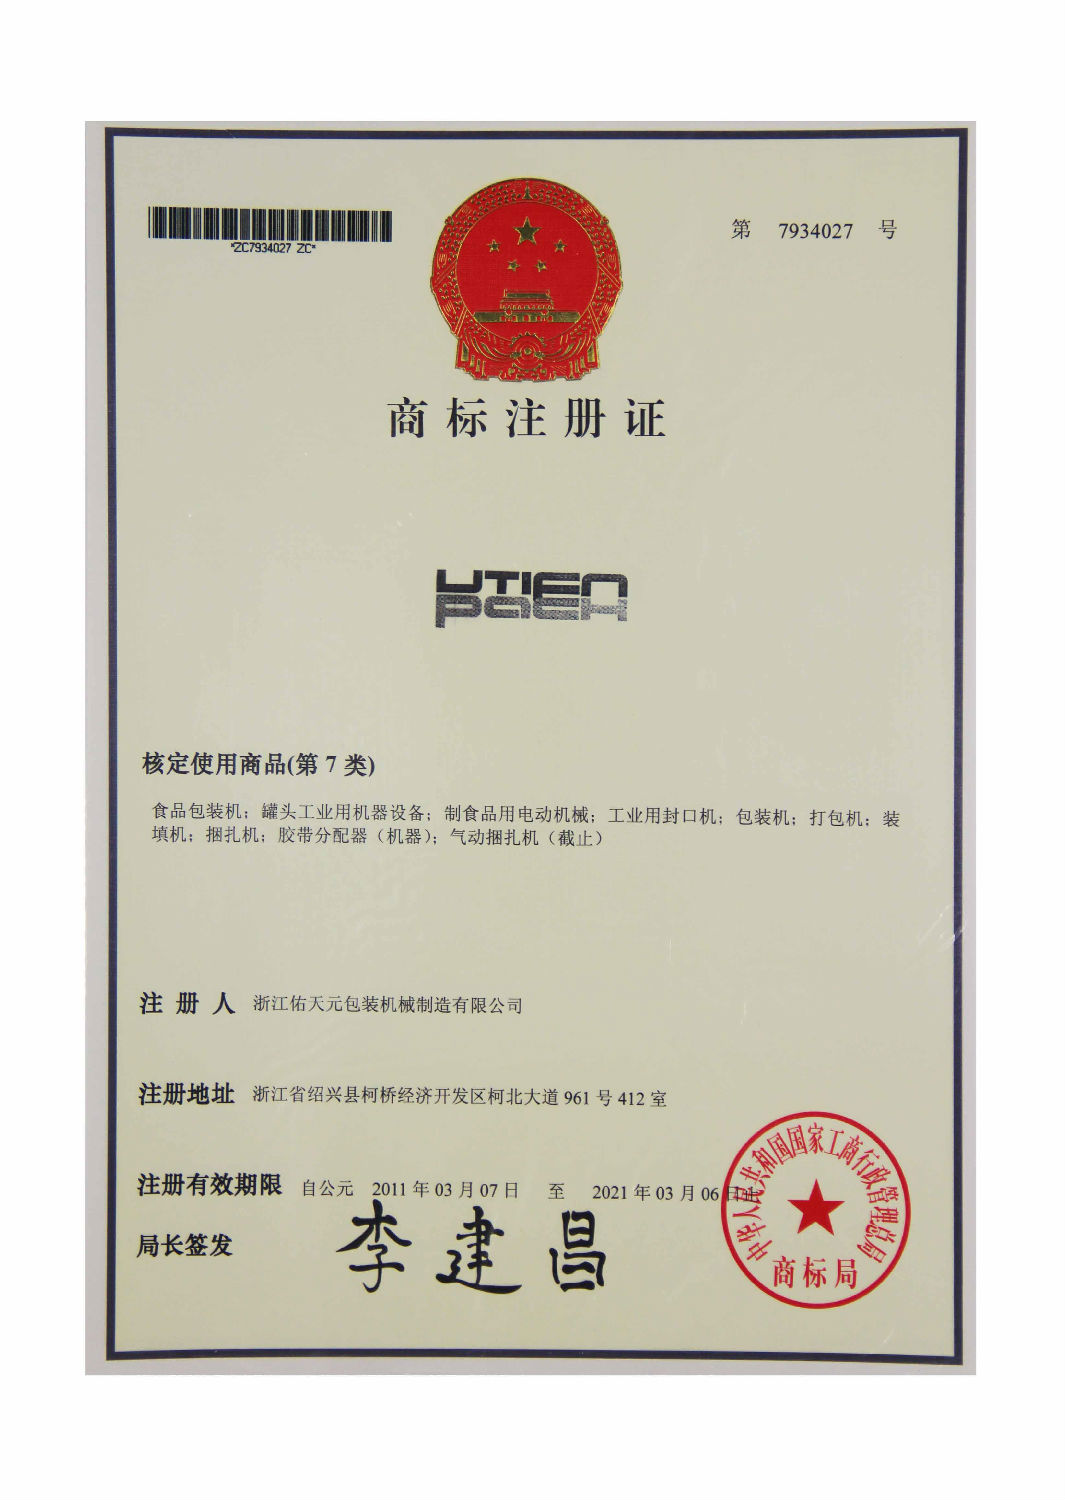 Utien ISO9001 certification.jpg